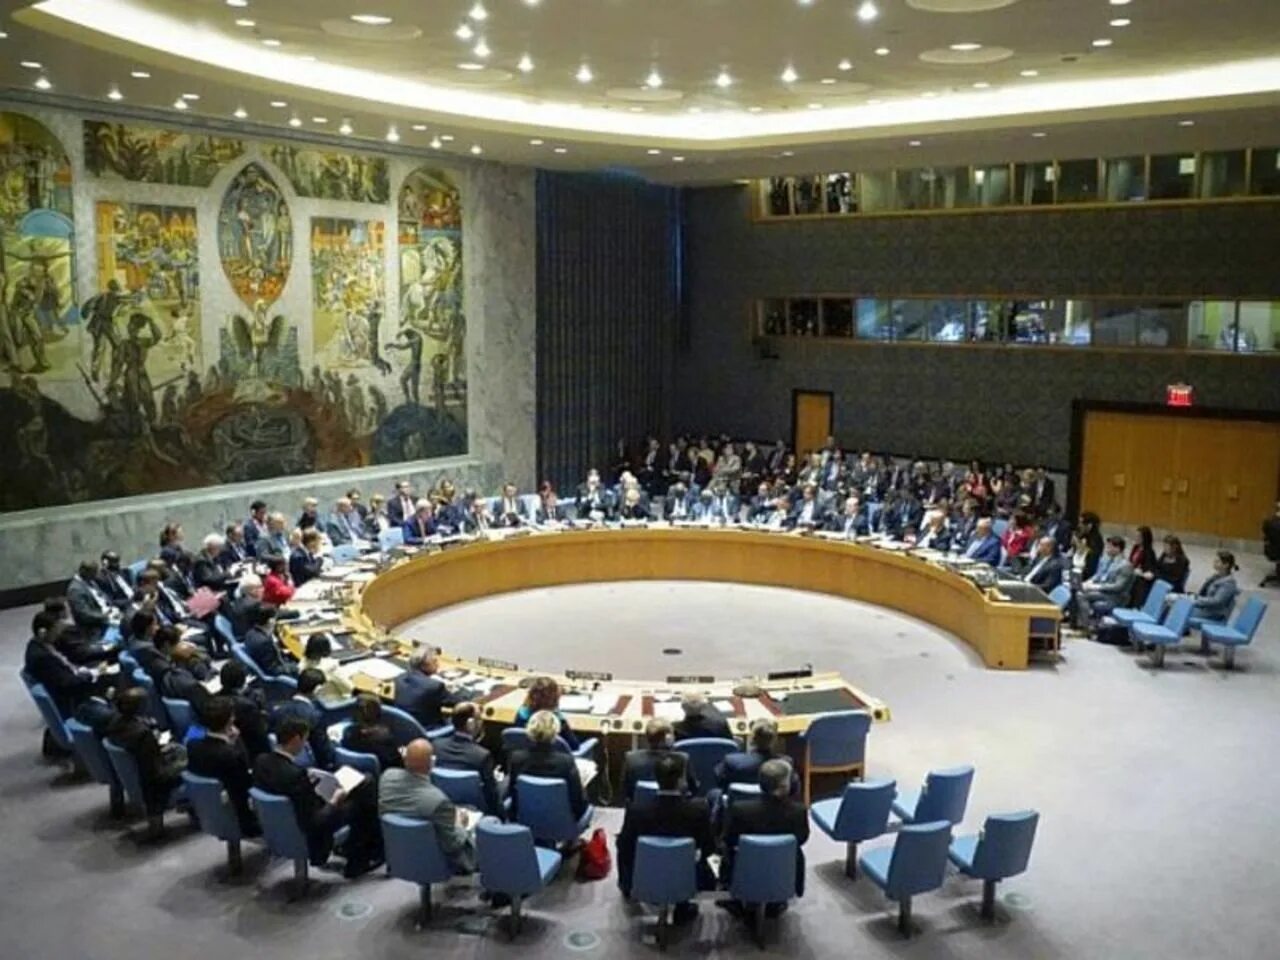 Чрезвычайное оон. Совет безопасности ООН (сб). Заседание Совбеза ООН. Заседание комиссии ООН. Зал совета безопасности ООН.